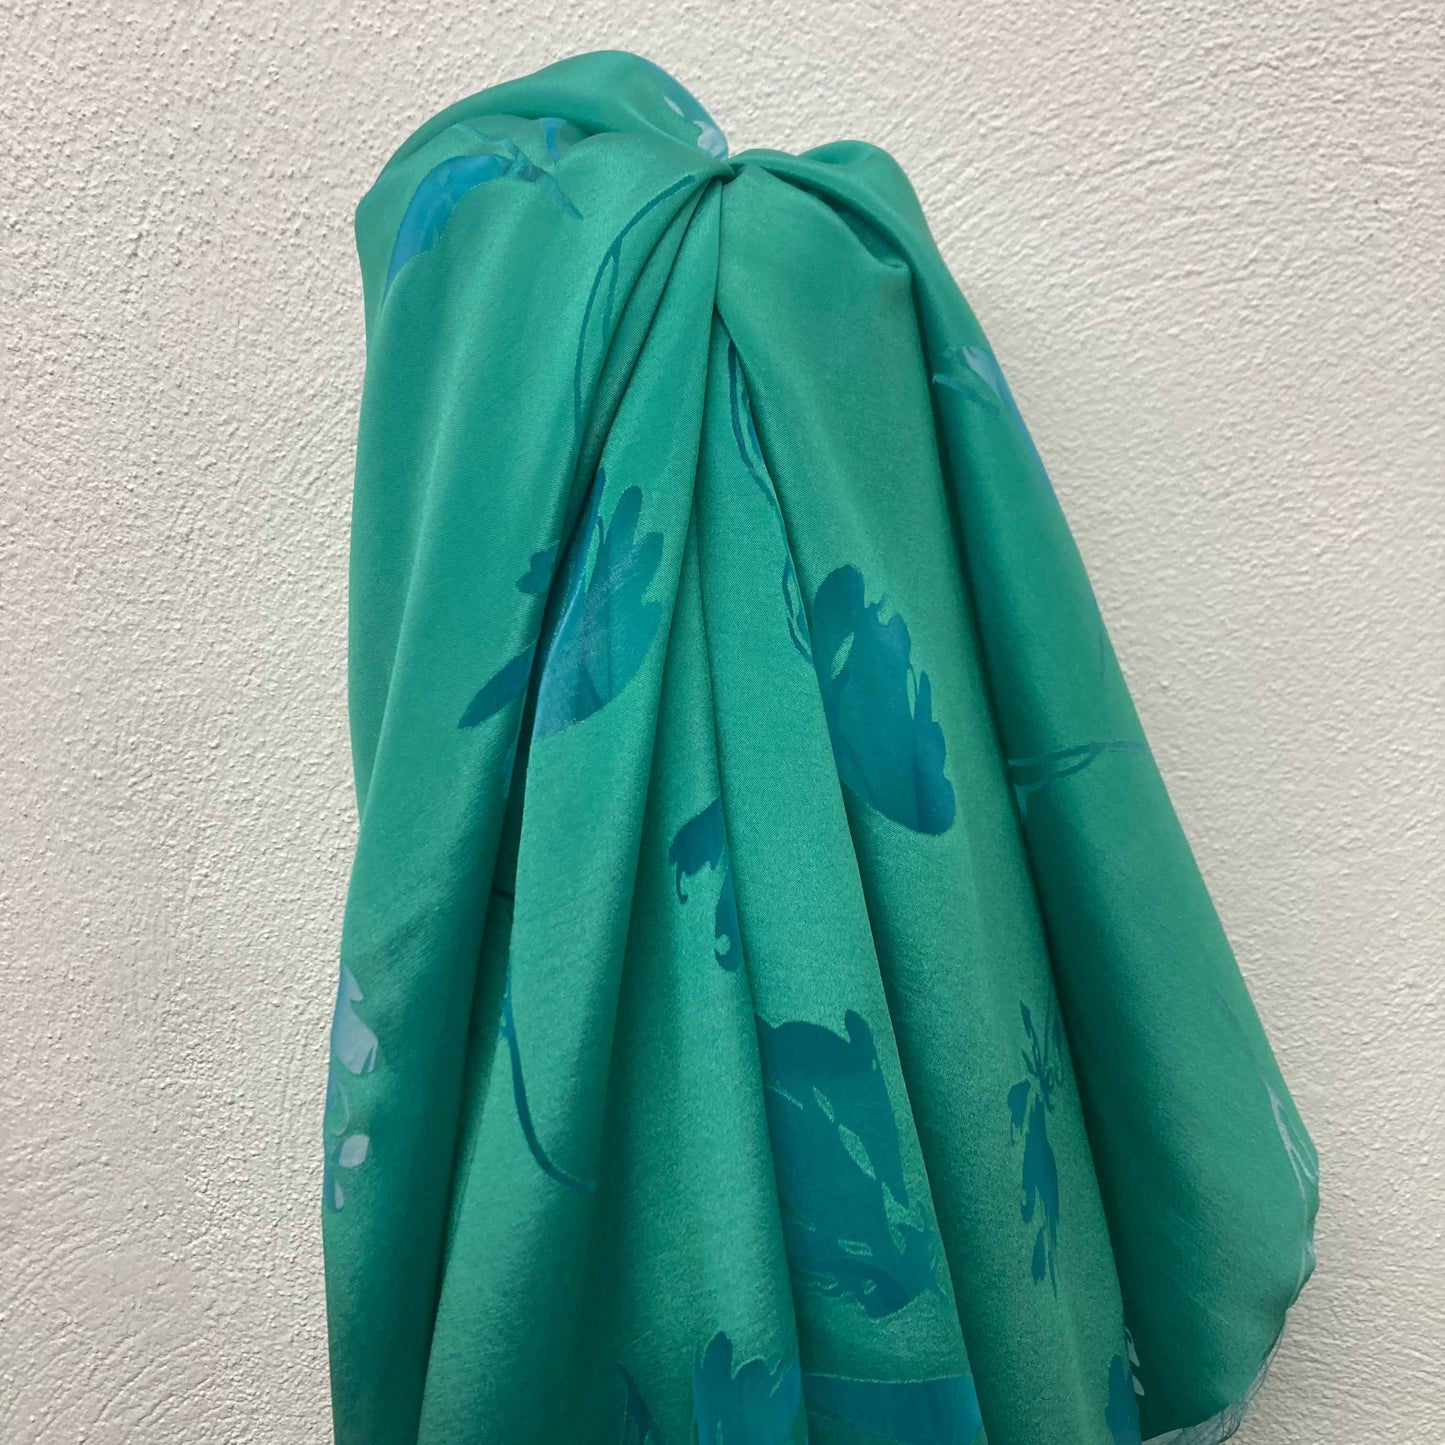 Burnout Satin Fabric - Green, blue